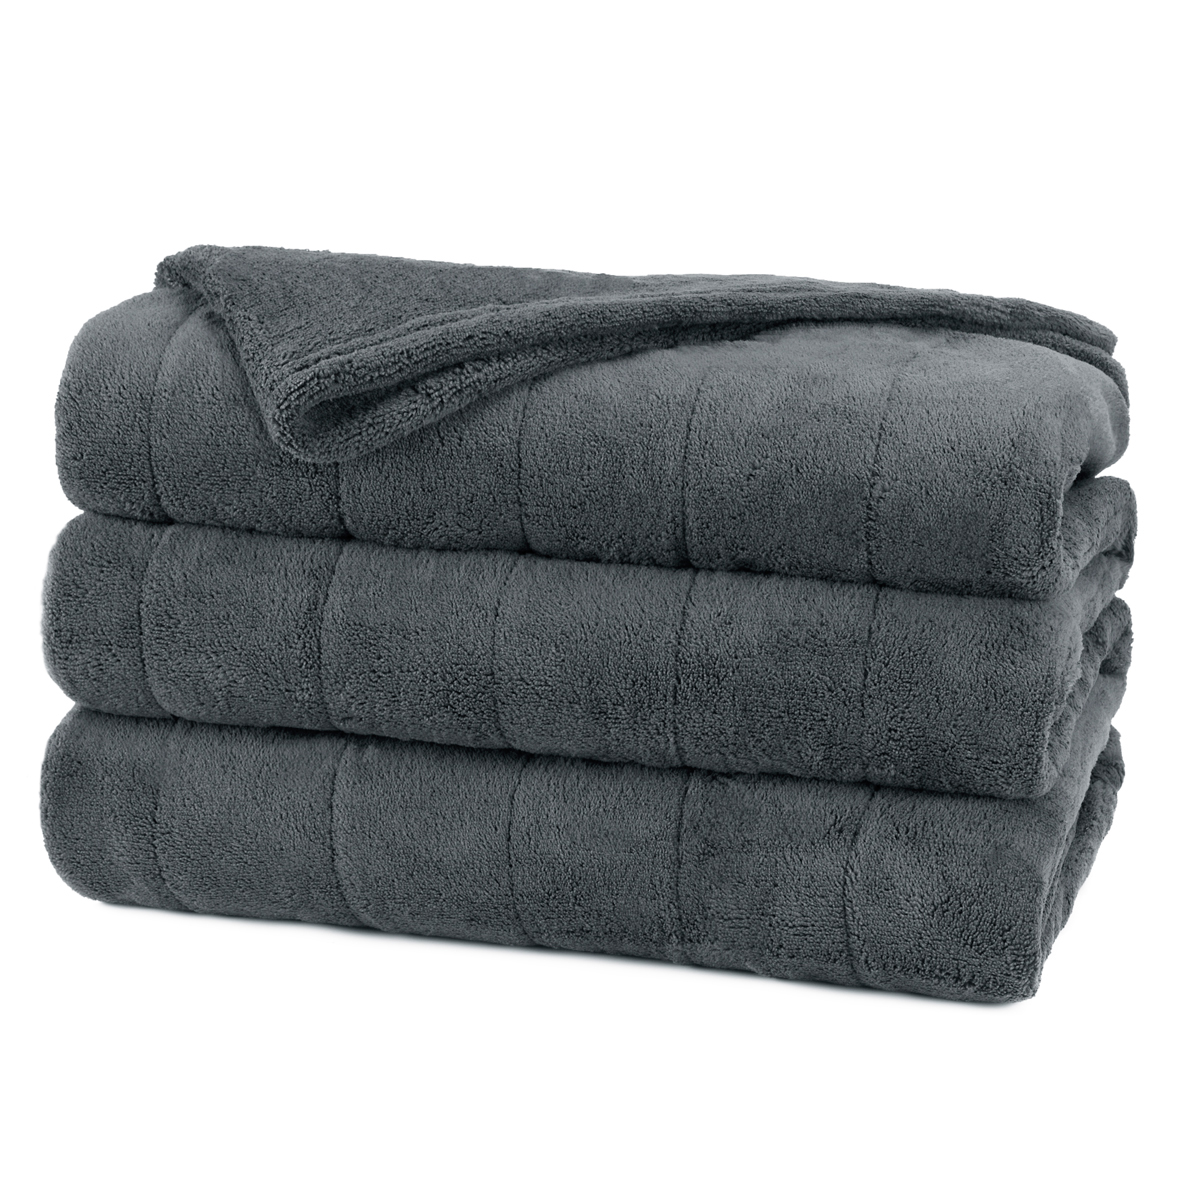 Jarden Bsm9kts-r825-16a00 Microplush Twin Heated Blanket